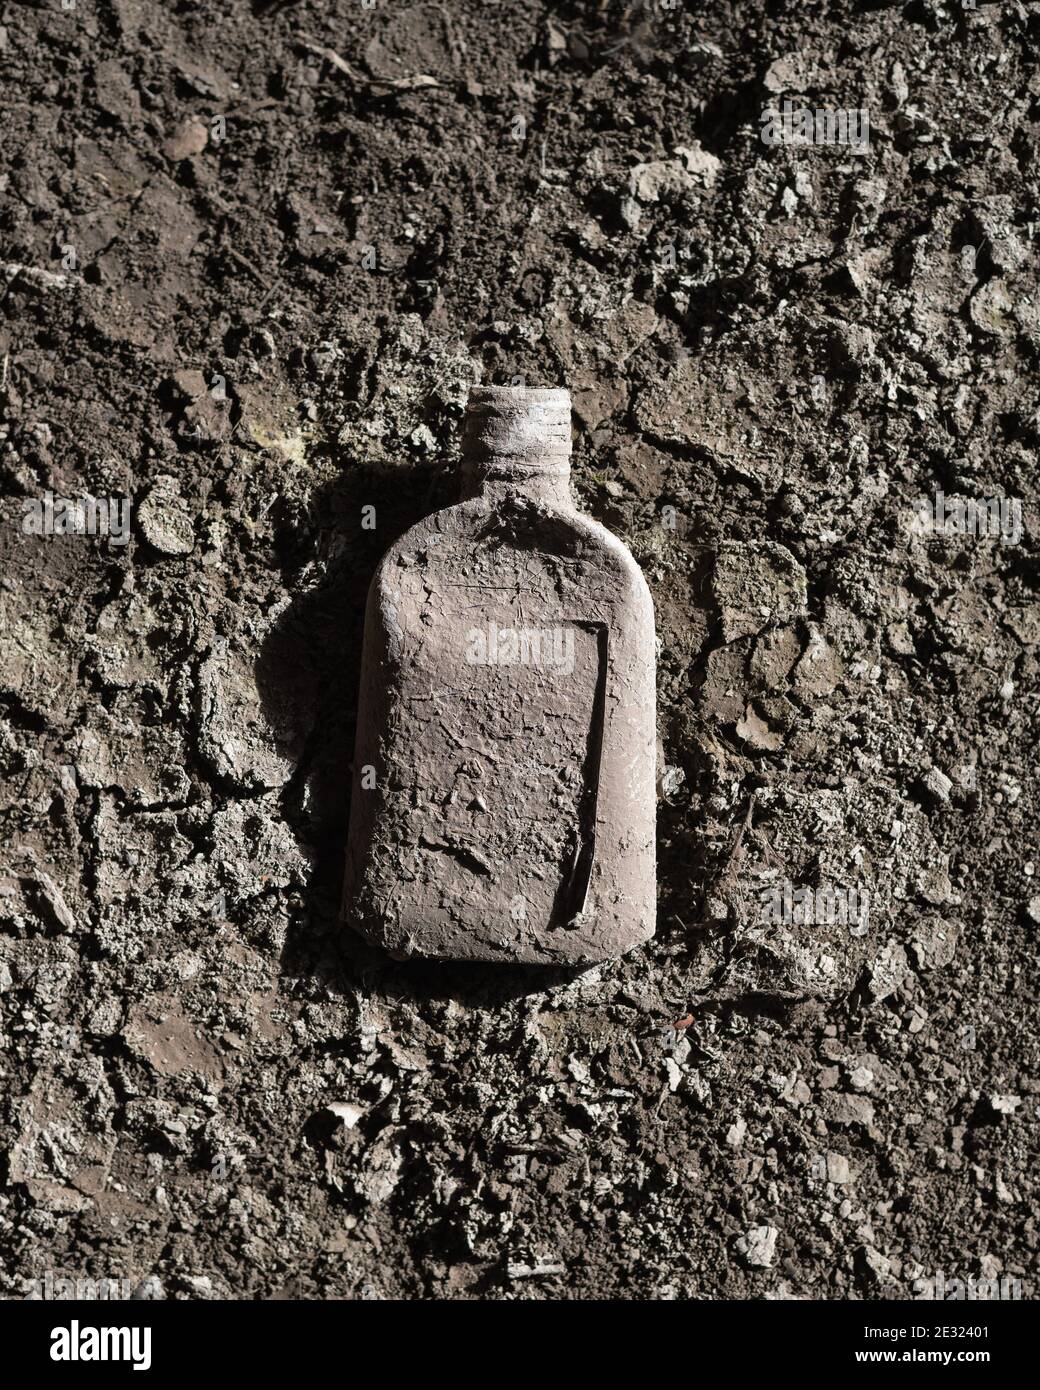 Dirty bottle isolated on muddy background Stock Photo